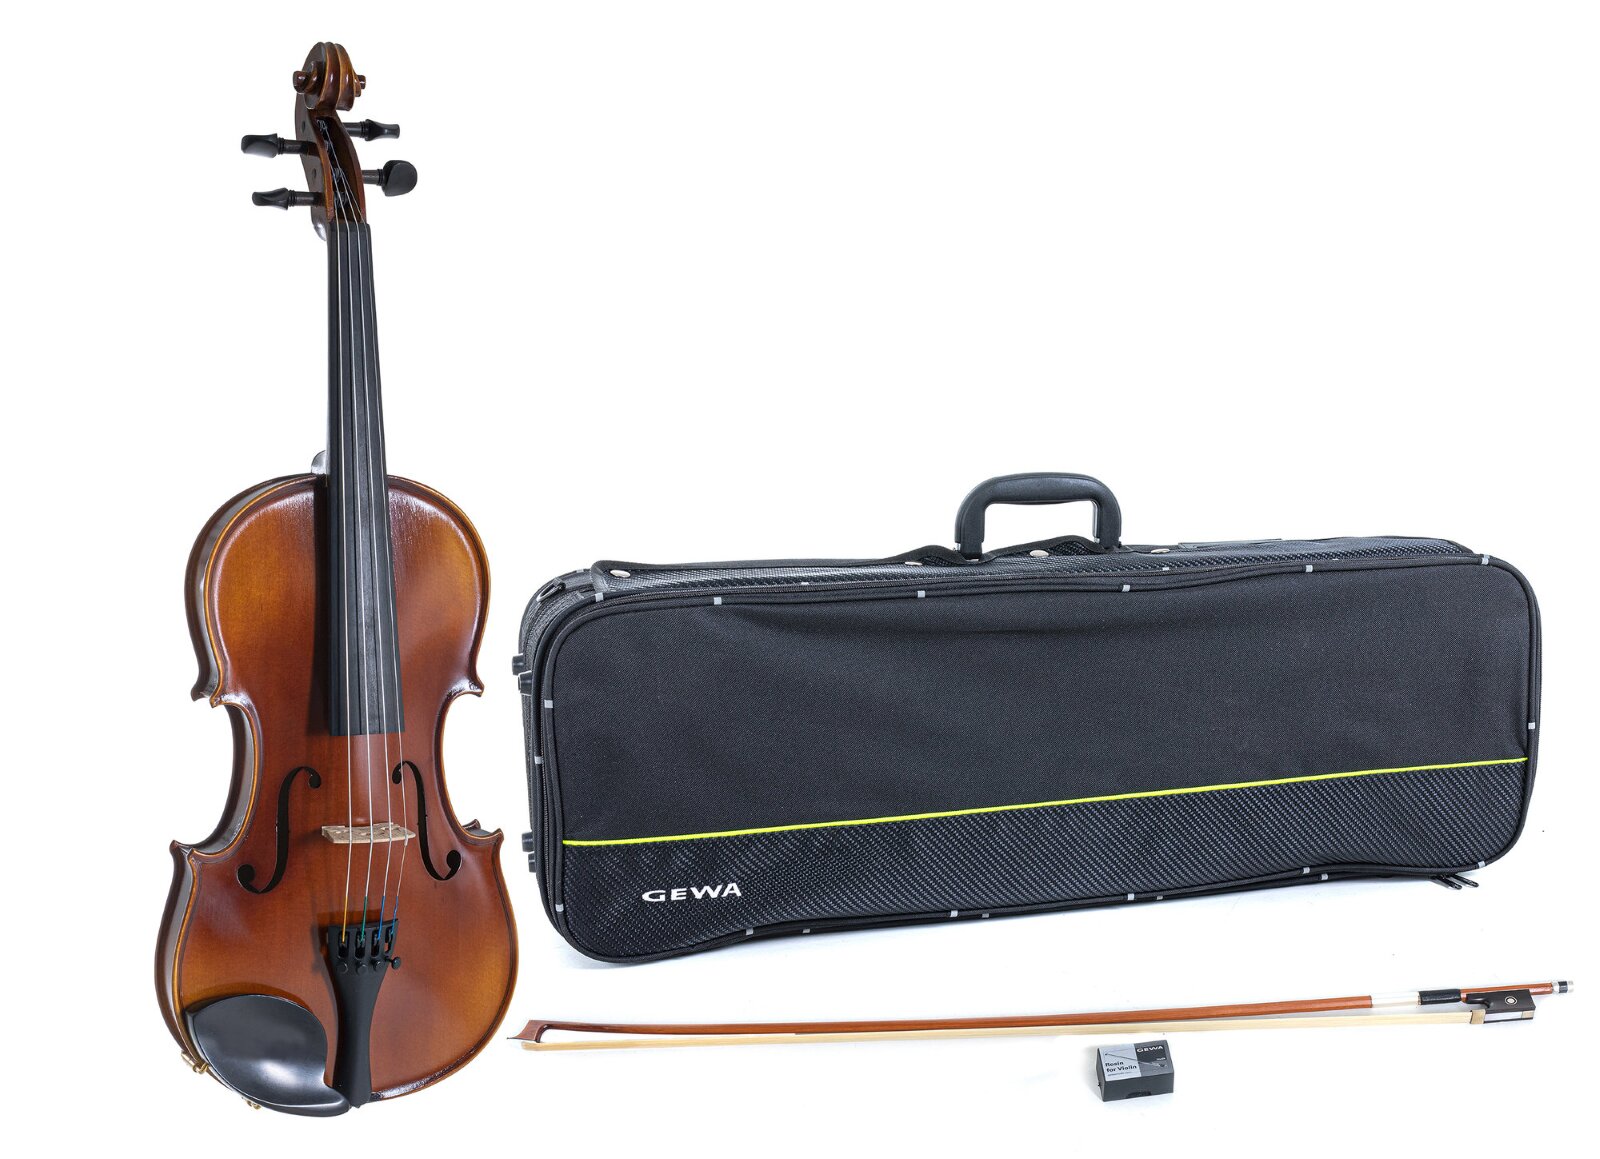 Gewa Ensemble Allegro violin 1/2 (Violin, case, bow, chin rest) : photo 1